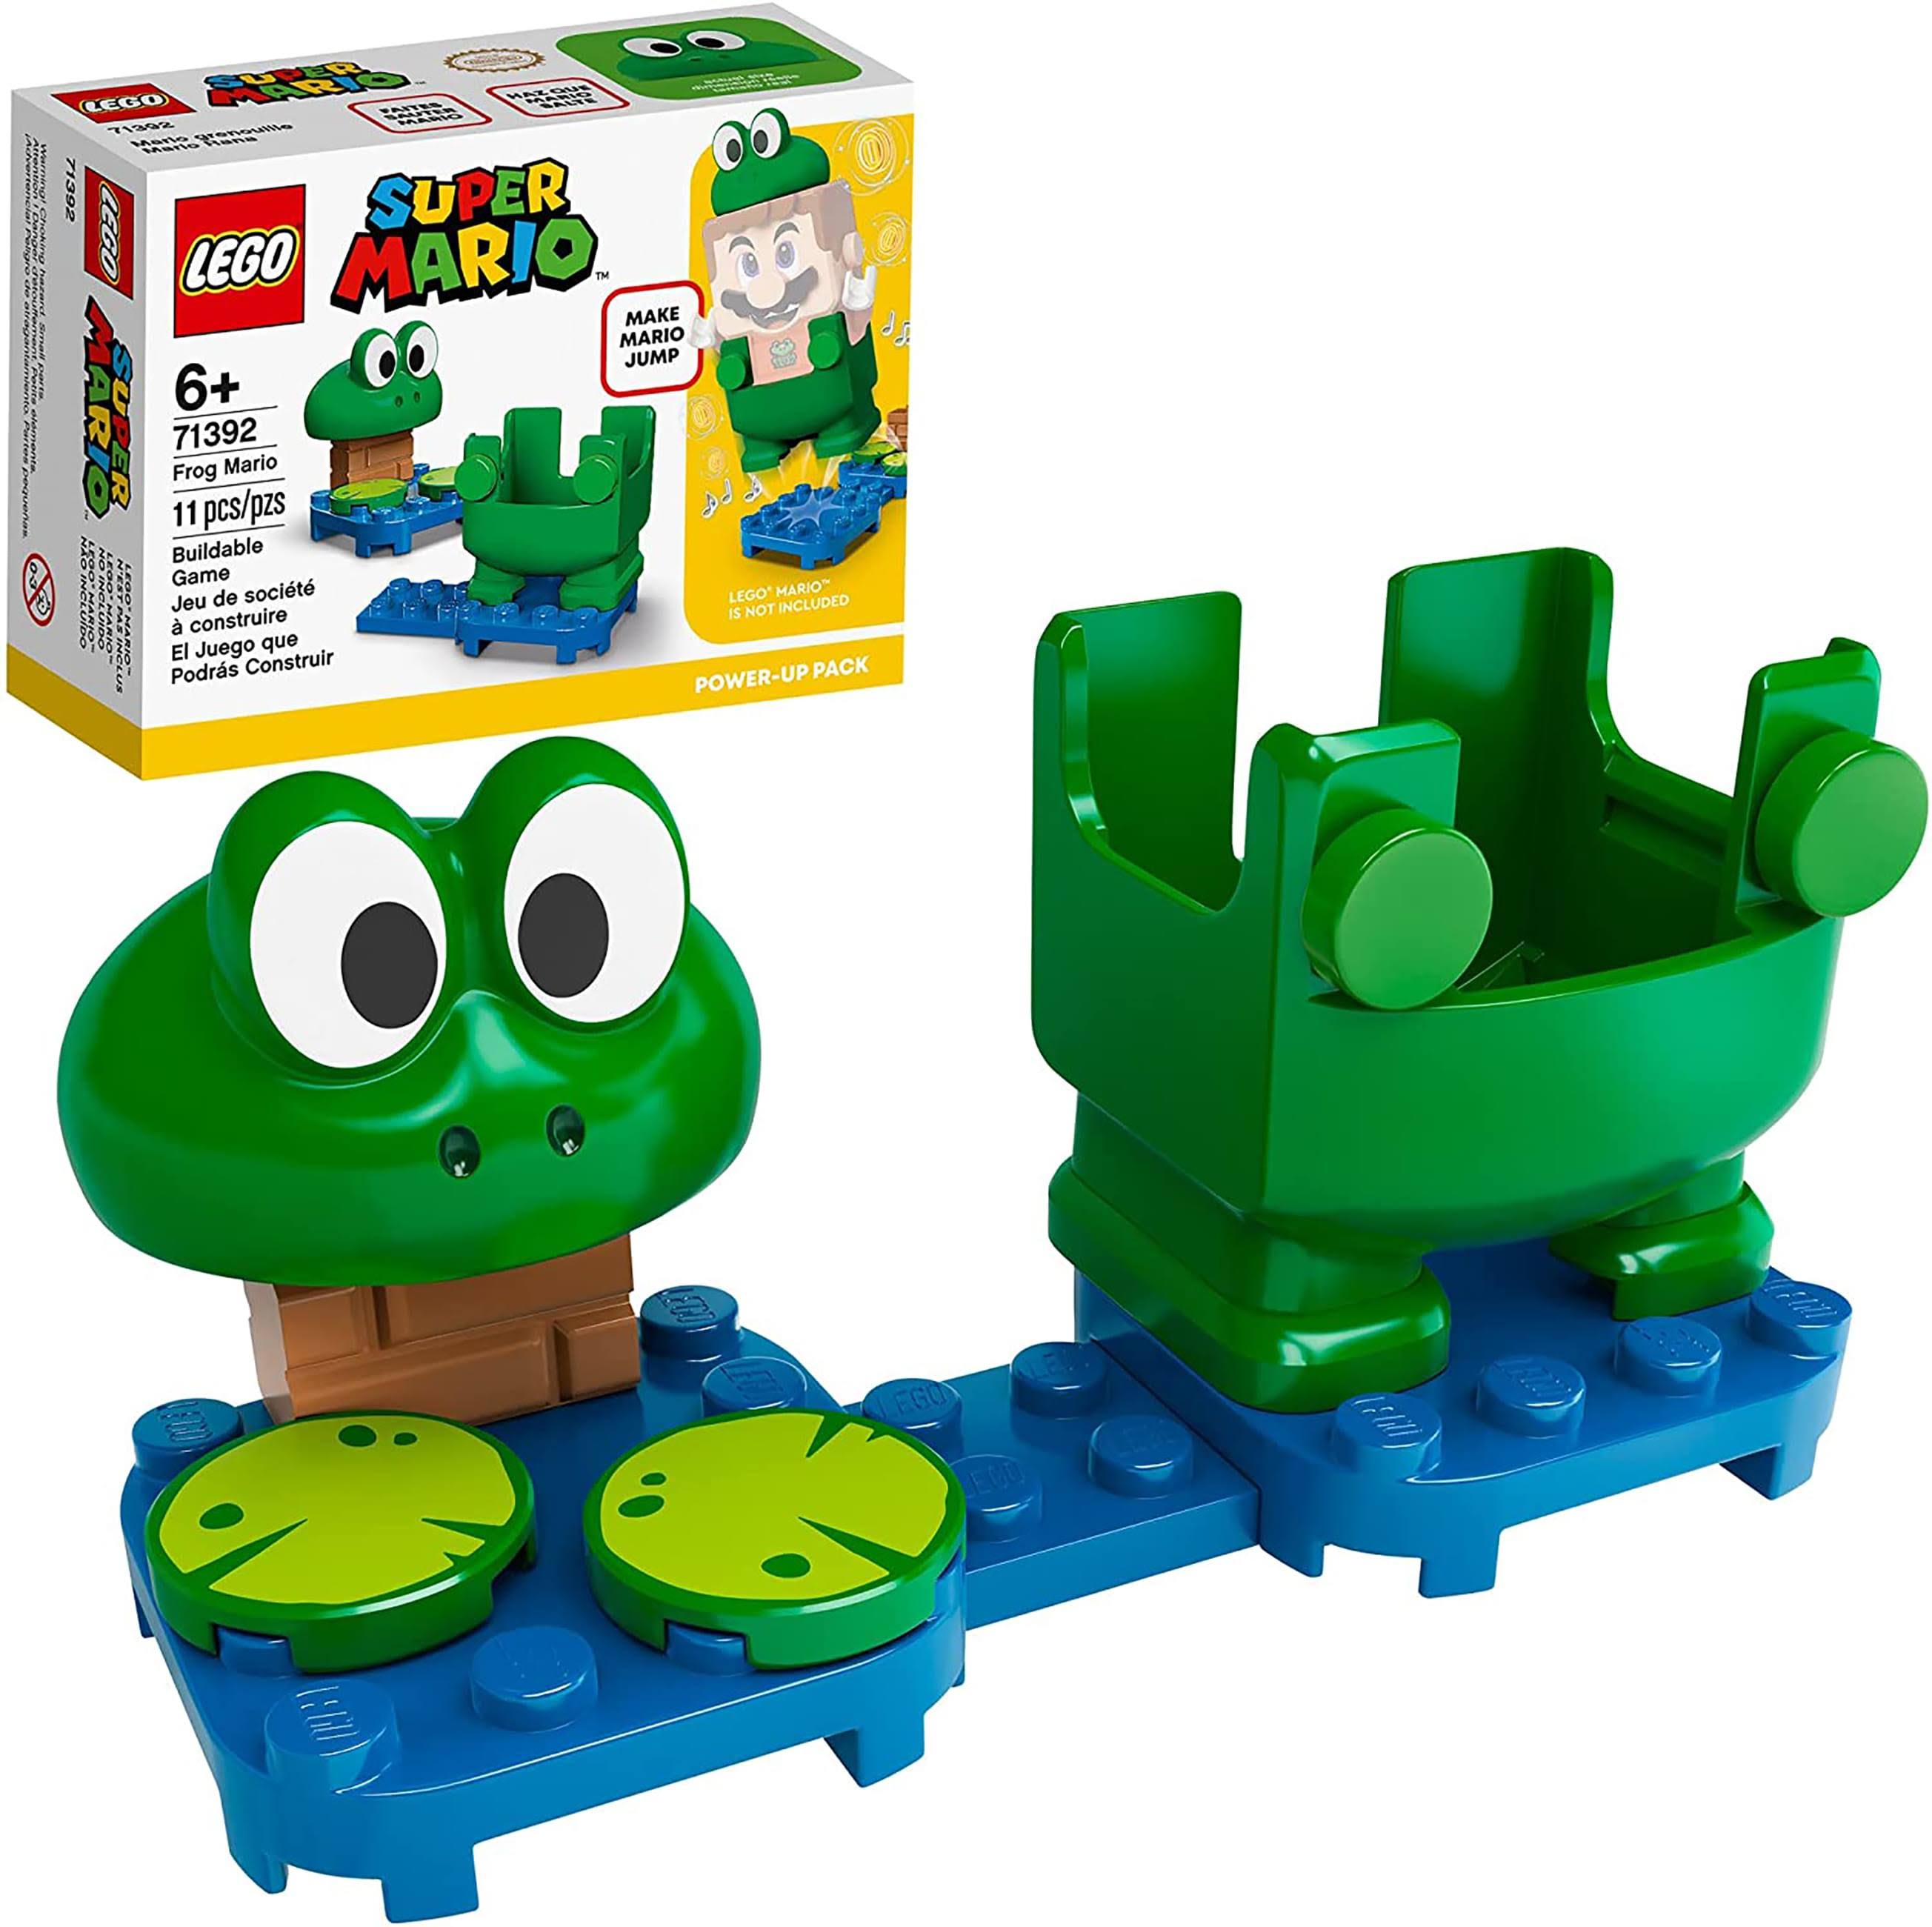 Lego 71392 Super Mario Frog Mario Power-Up Pack